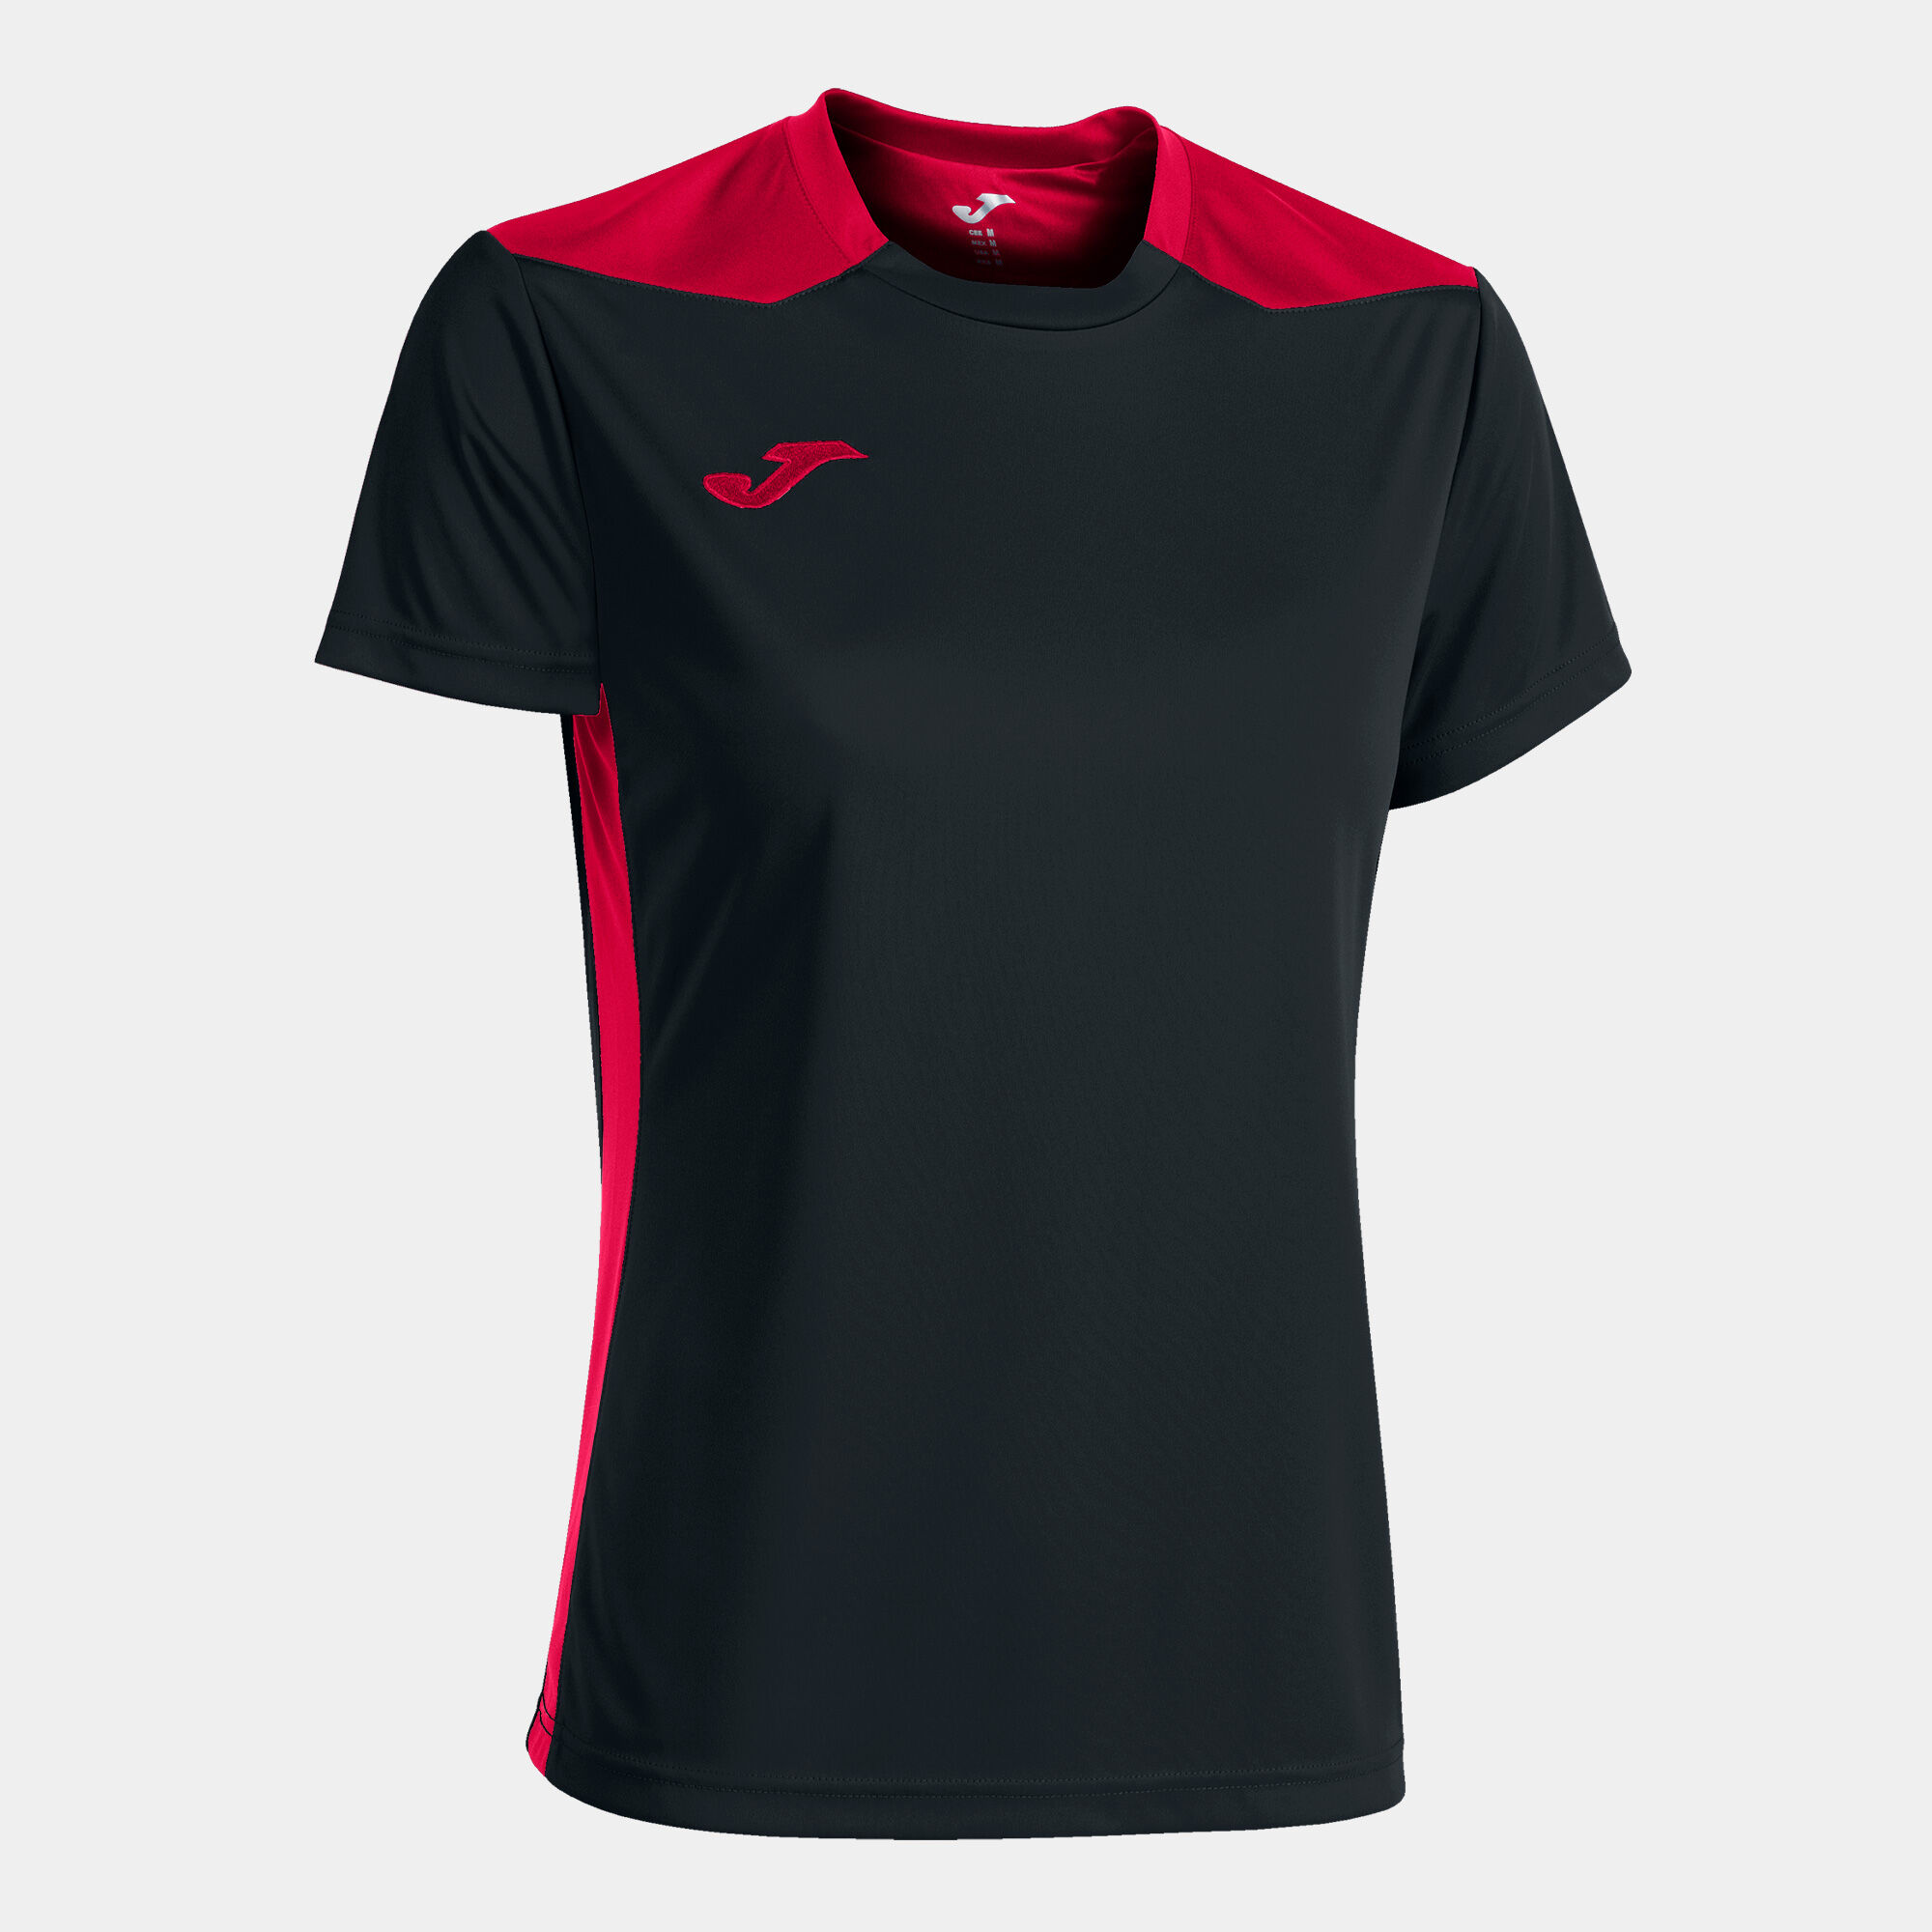 Shirt short sleeve woman Championship VI black red